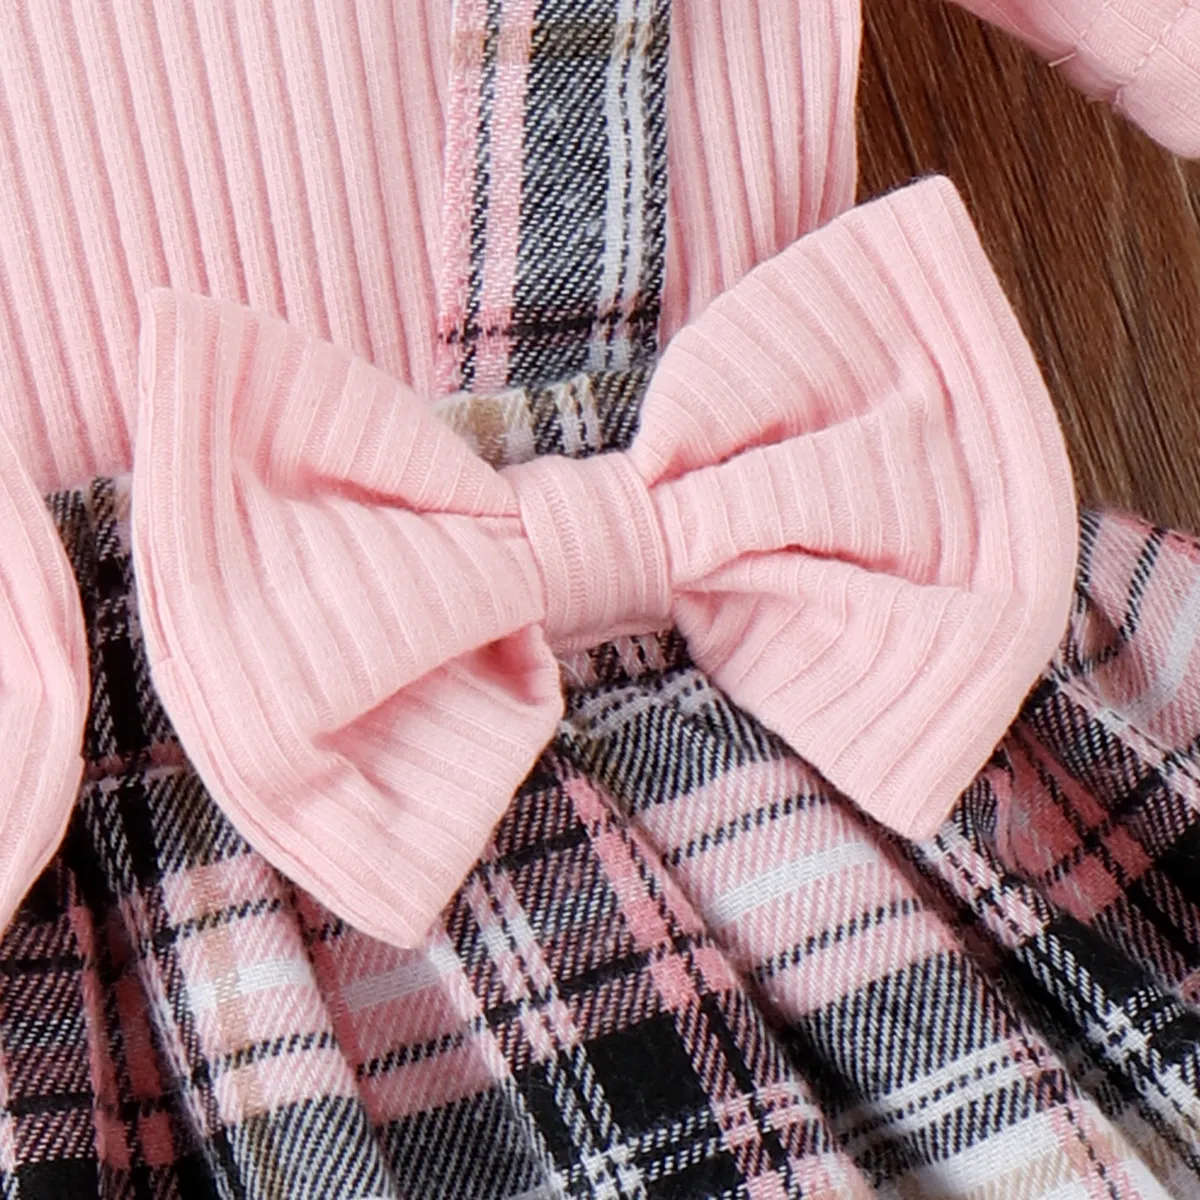 2pcs Baby Girl 95% Cotton Ribbed Ruffle Trim Bow Decor Short-sleeve Spliced Plaid Dress & Headband Set Pink big image 1